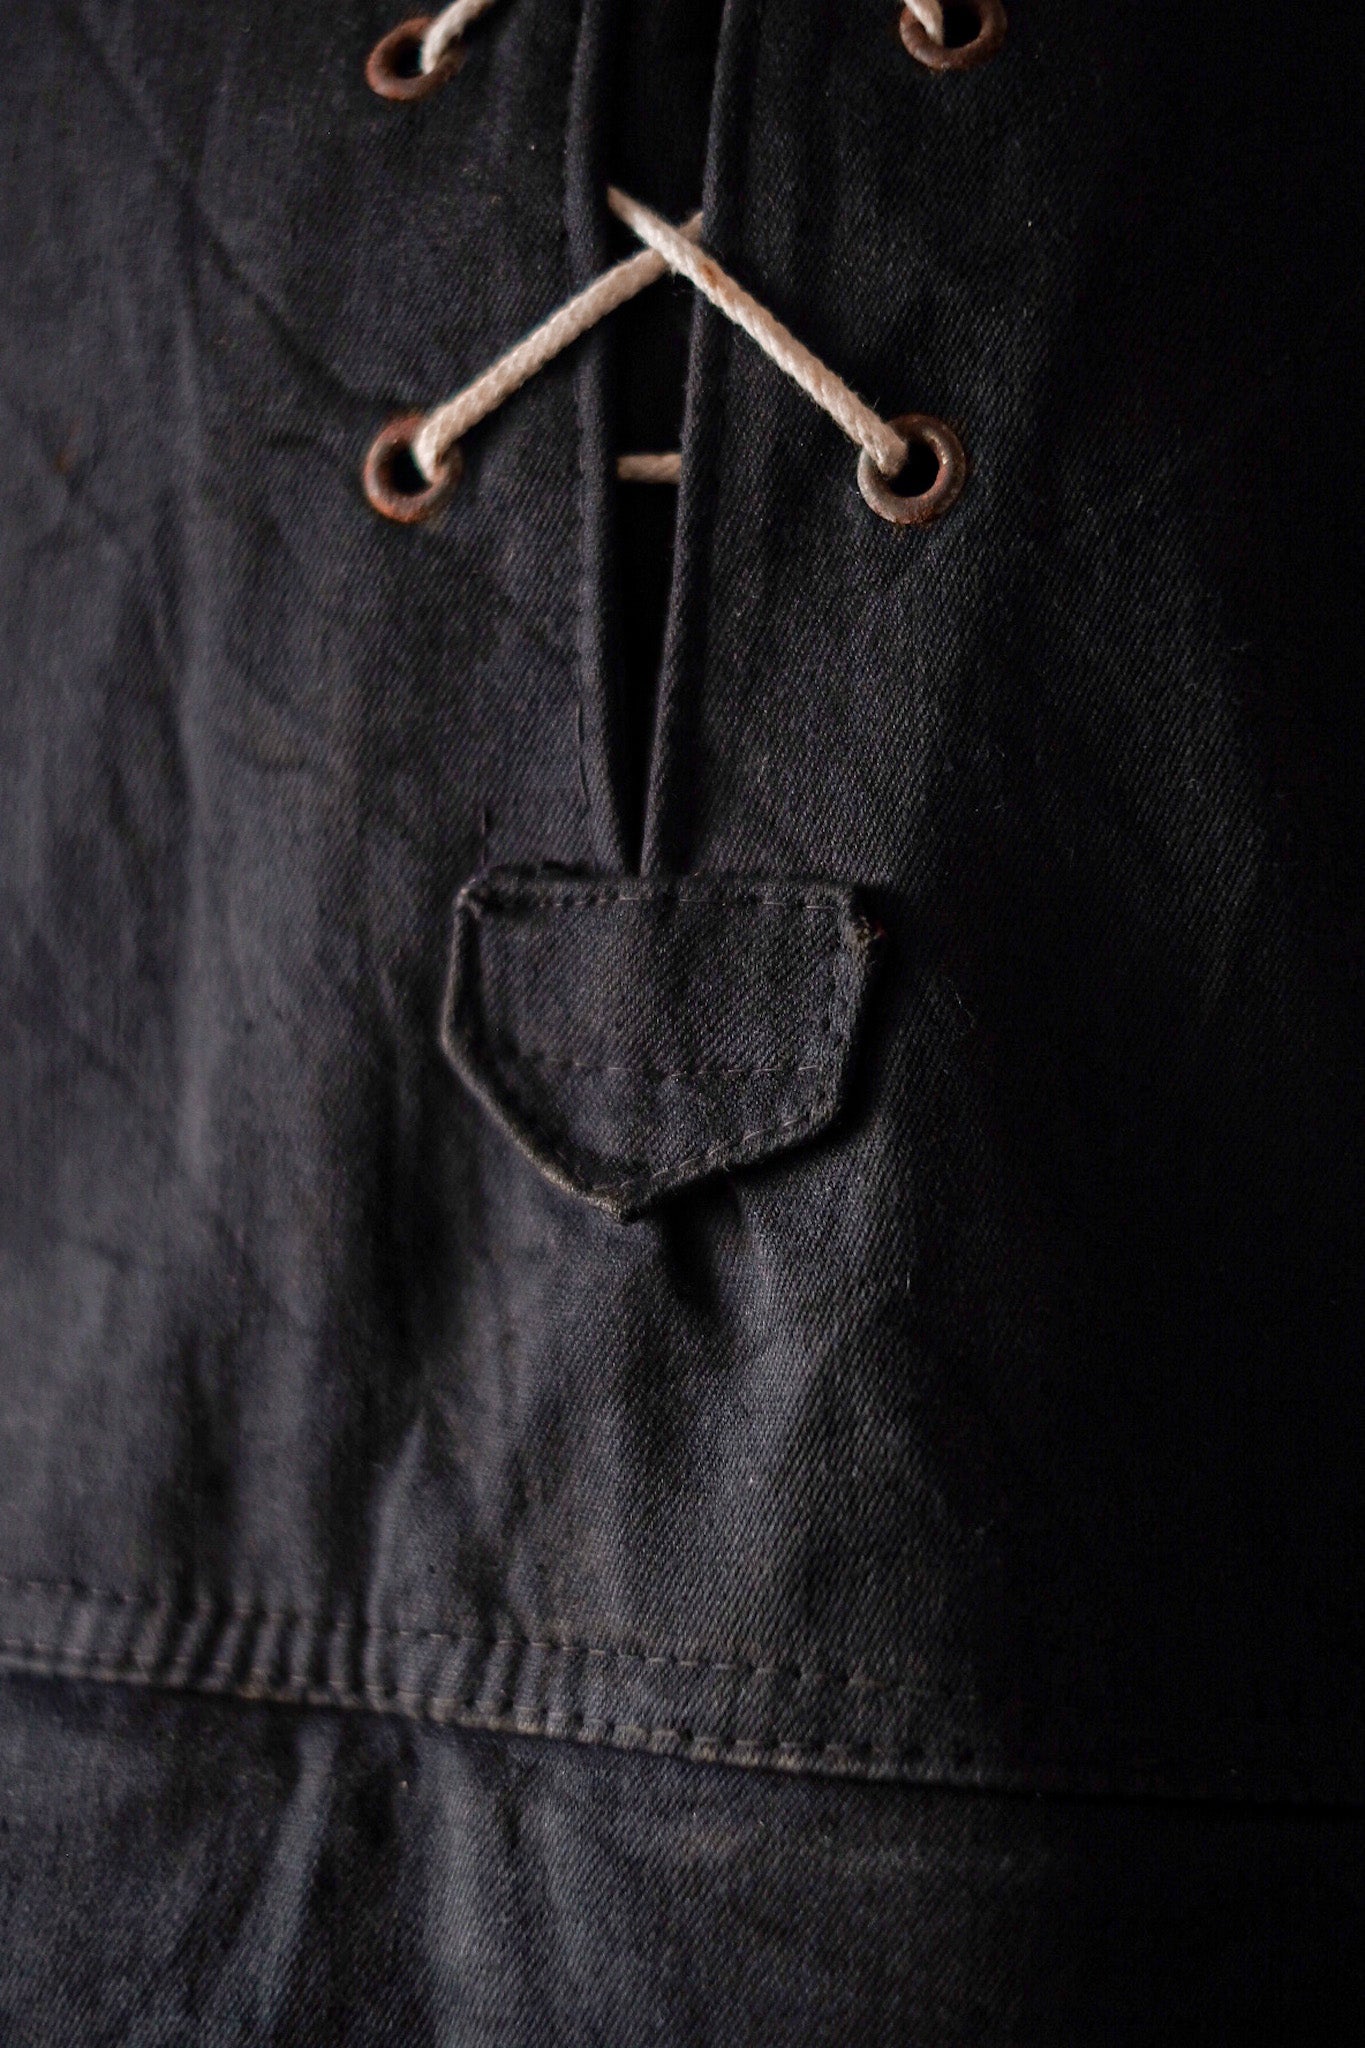 [~ 40's] British Vintage Black Cotton Anorak